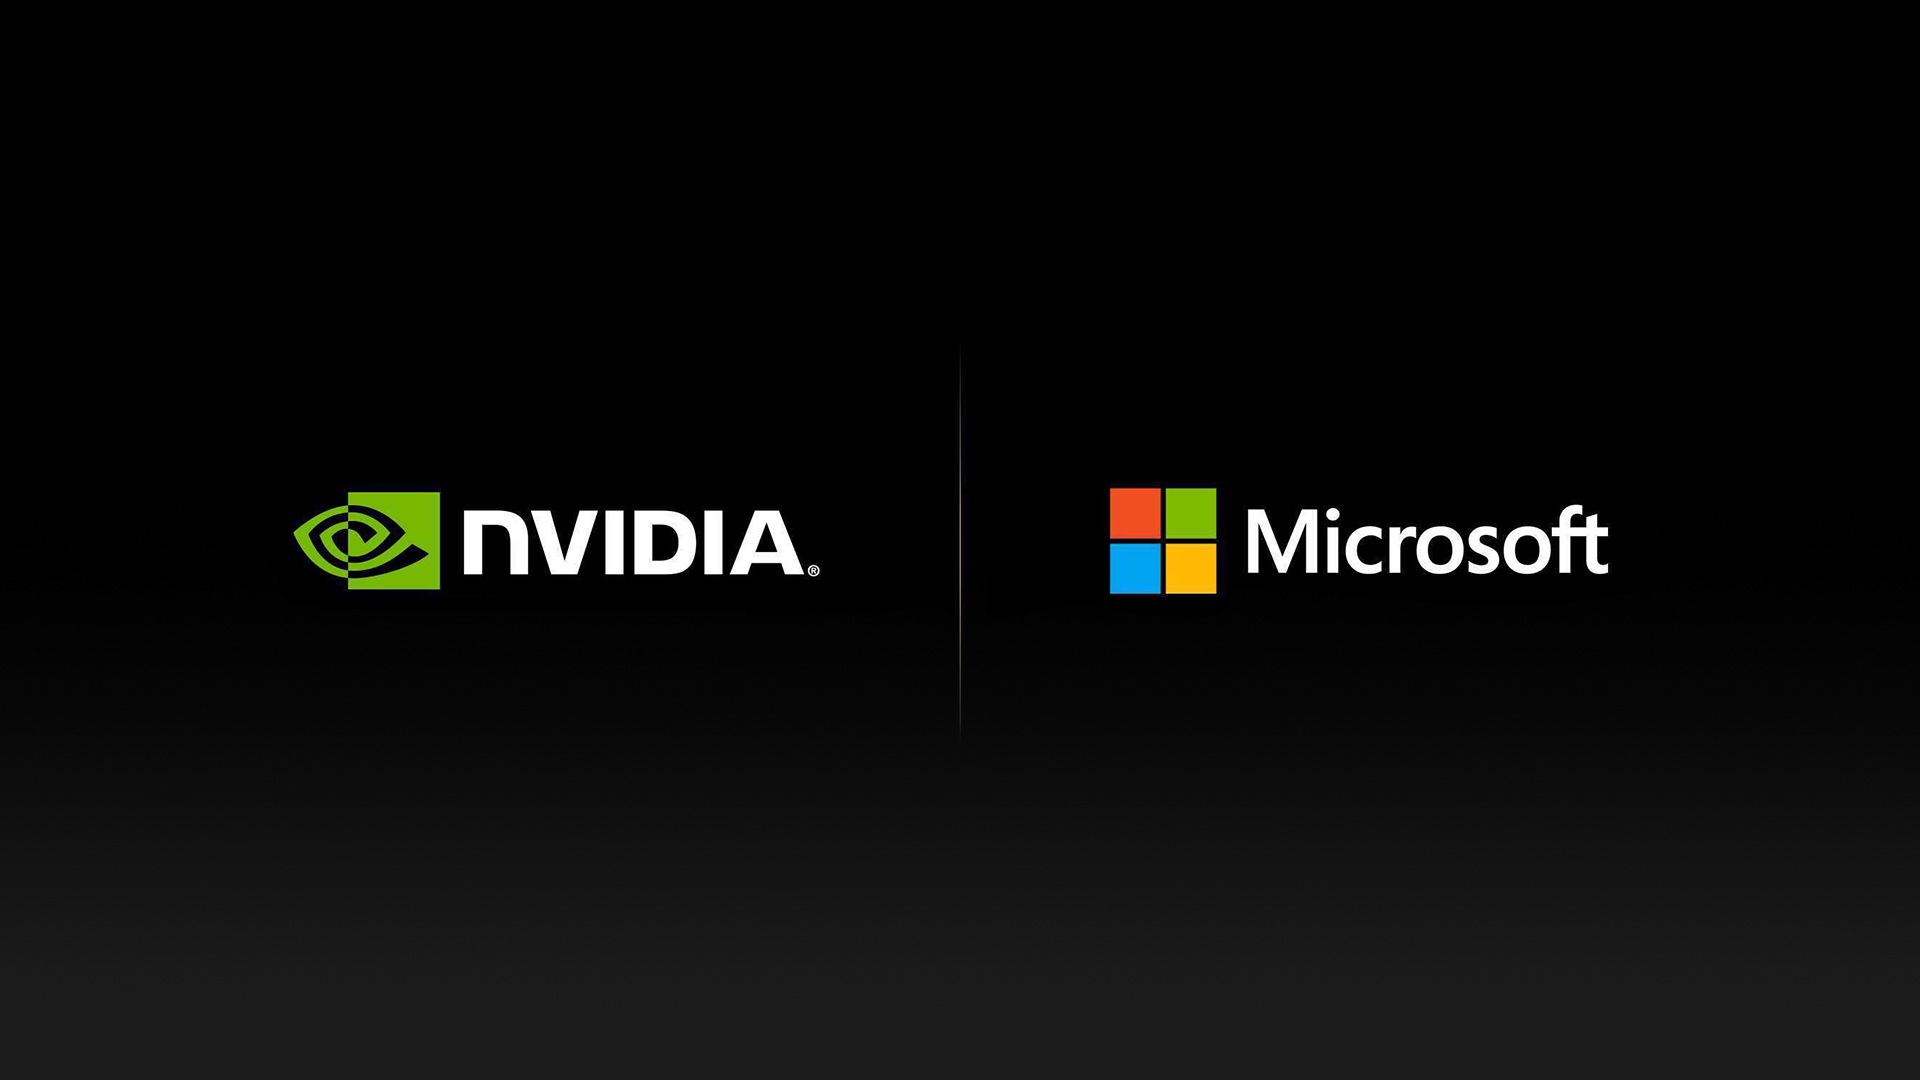 NVIDIA and Microsoft logos on black background.